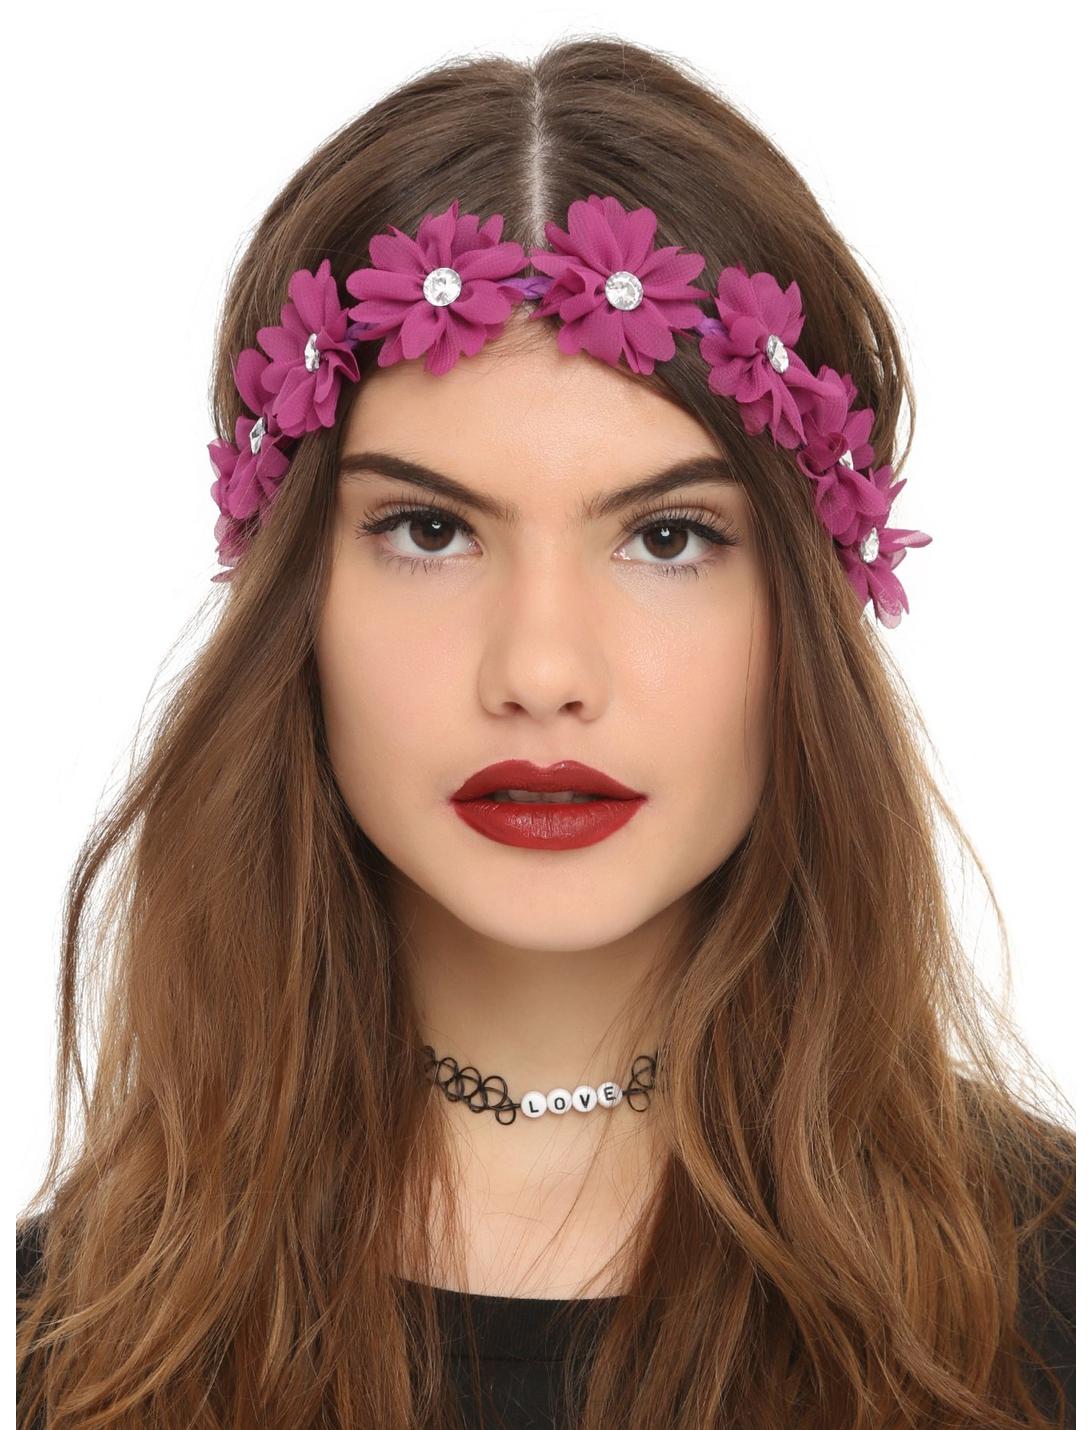 Purple Chiffon Flower Stretchy Headband, , hi-res